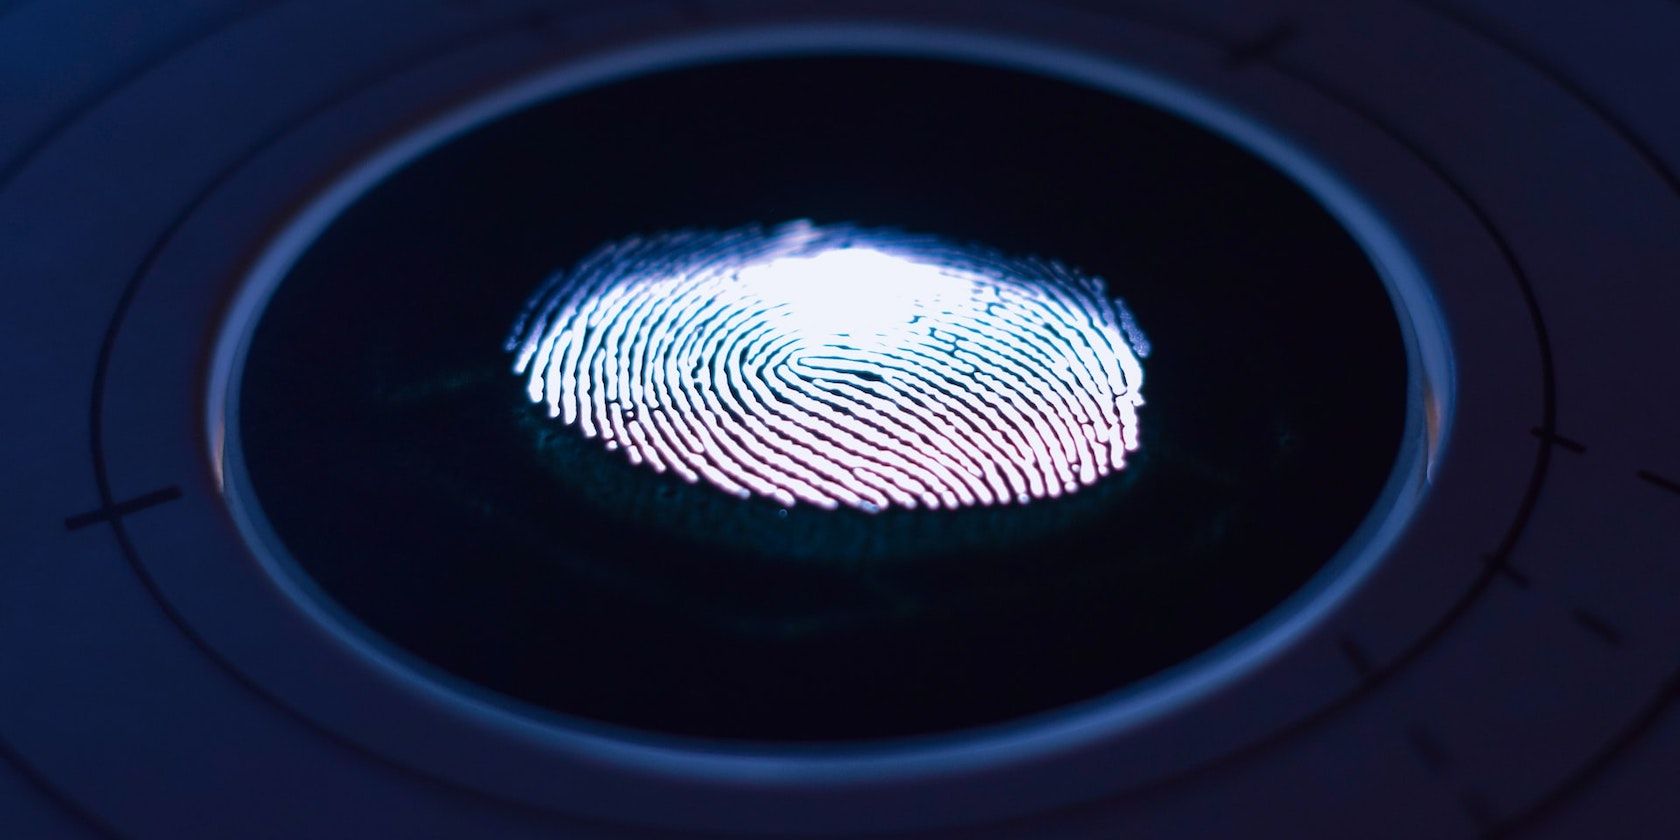 enable fingerprint login on ubuntu